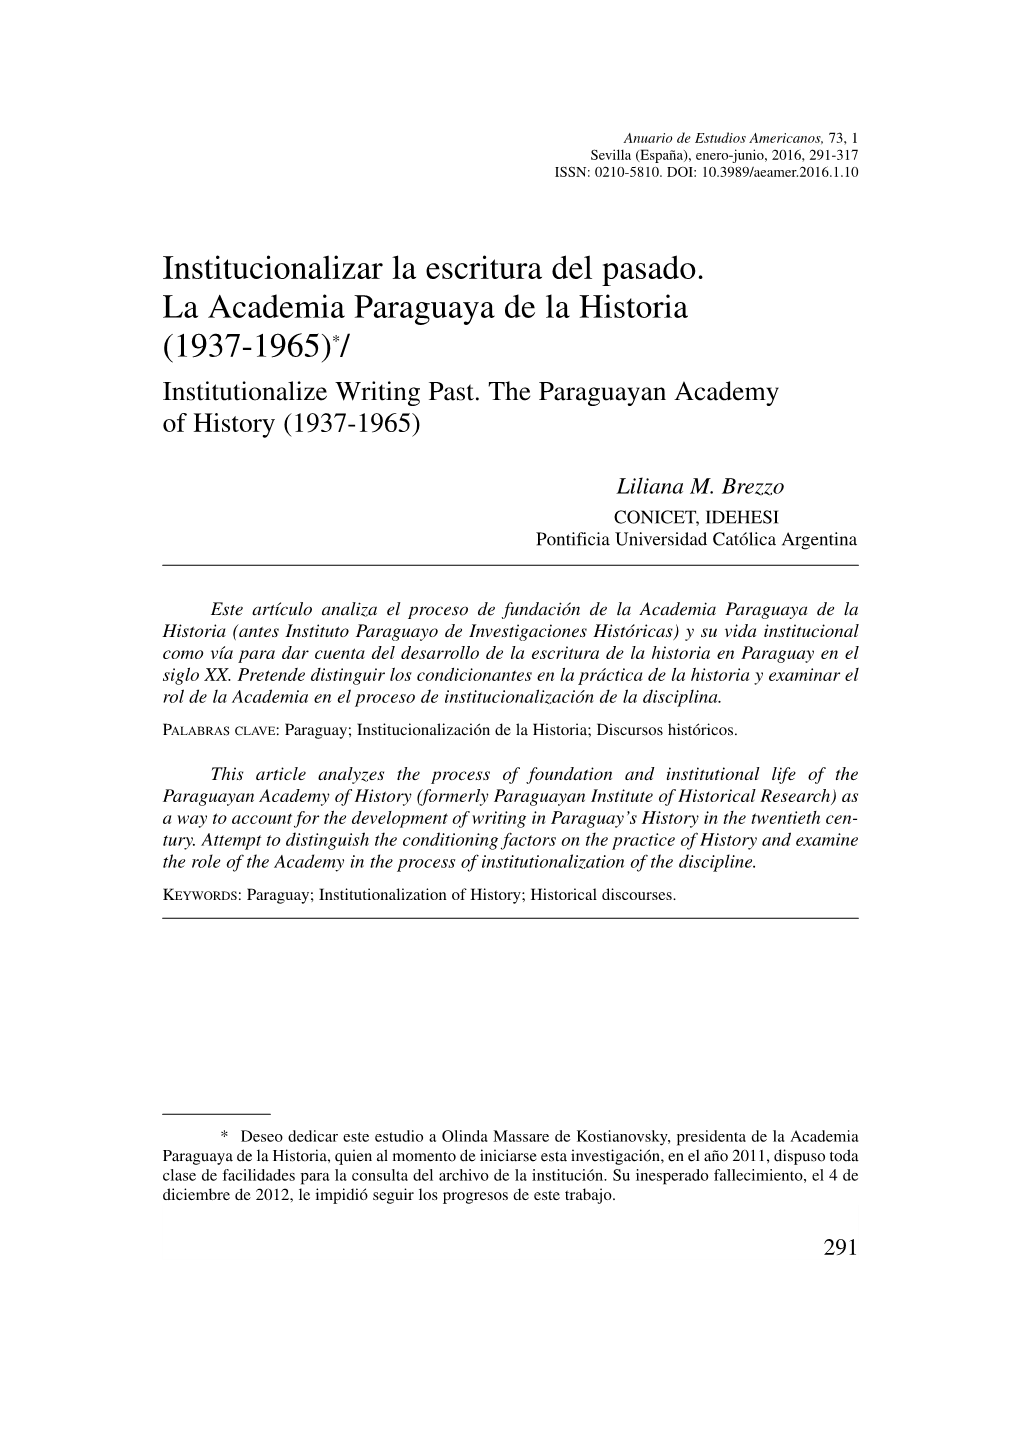 Institucionalizar La Escritura Del Pasado. La Academia Paraguaya De La Historia (1937-1965)*/ Institutionalize Writing Past